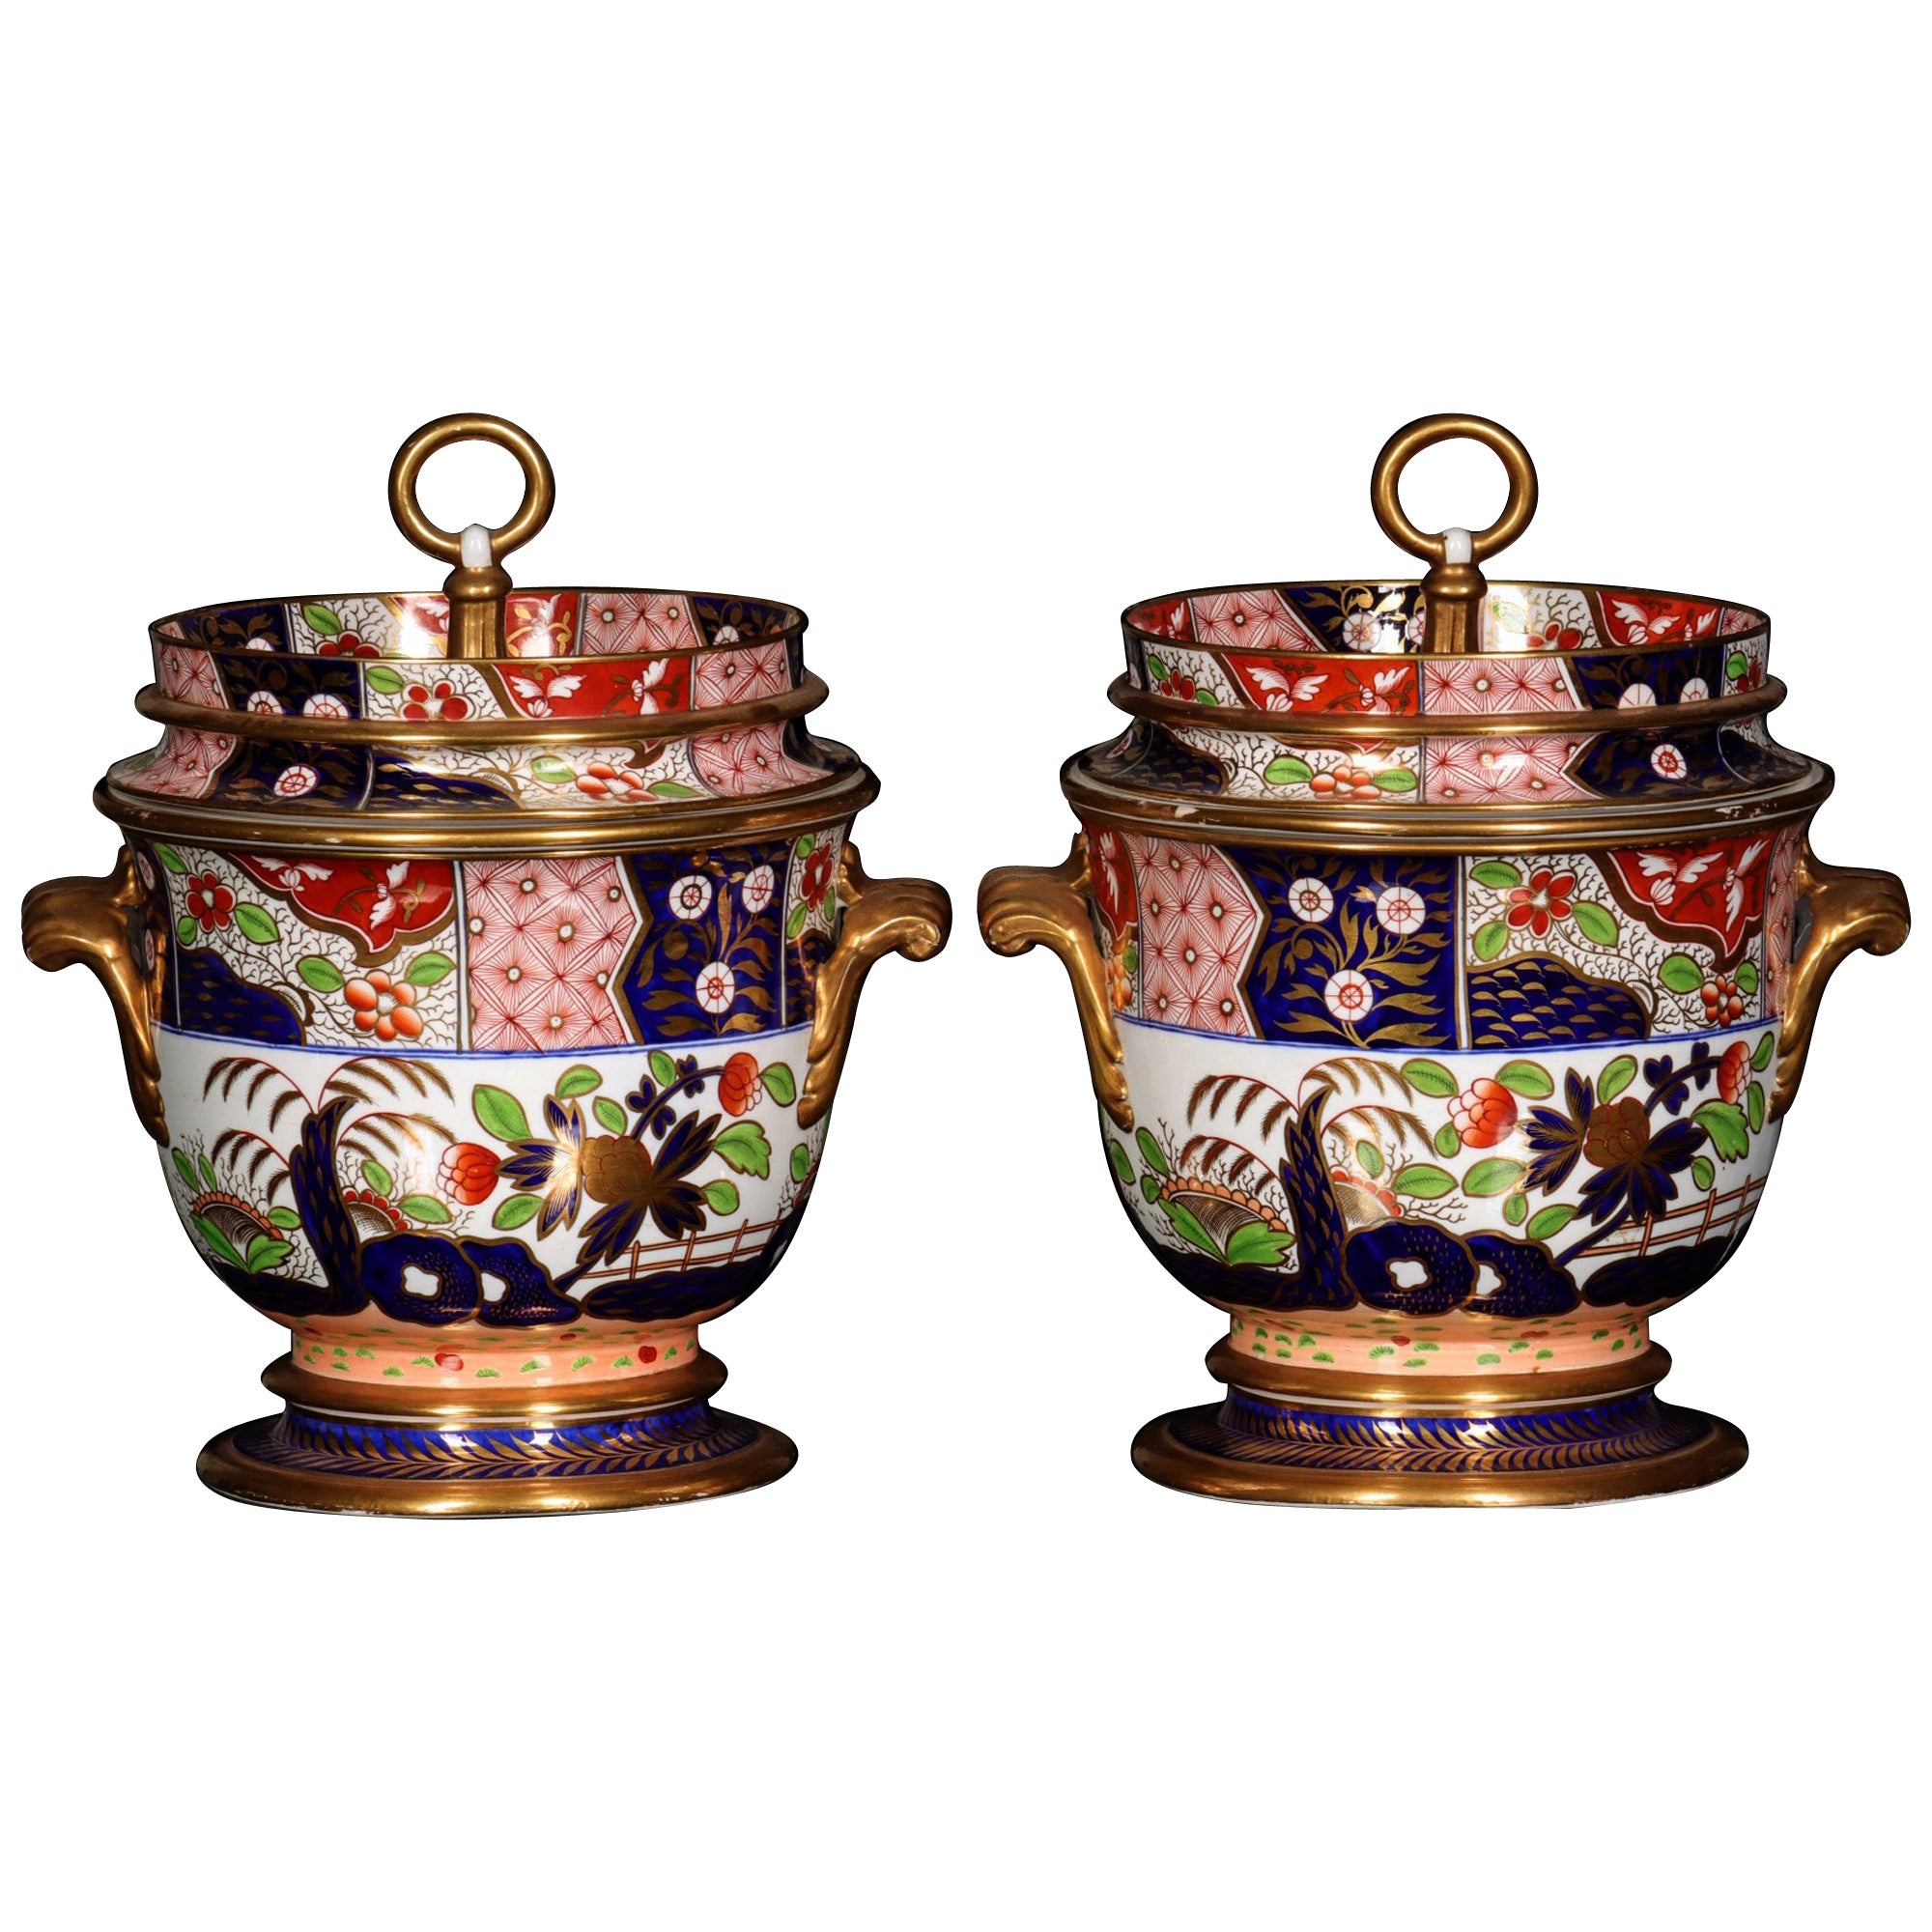 Regency Spode Porcelain Imari Fruit Coolers, Covers & Liners, Pattern 2957